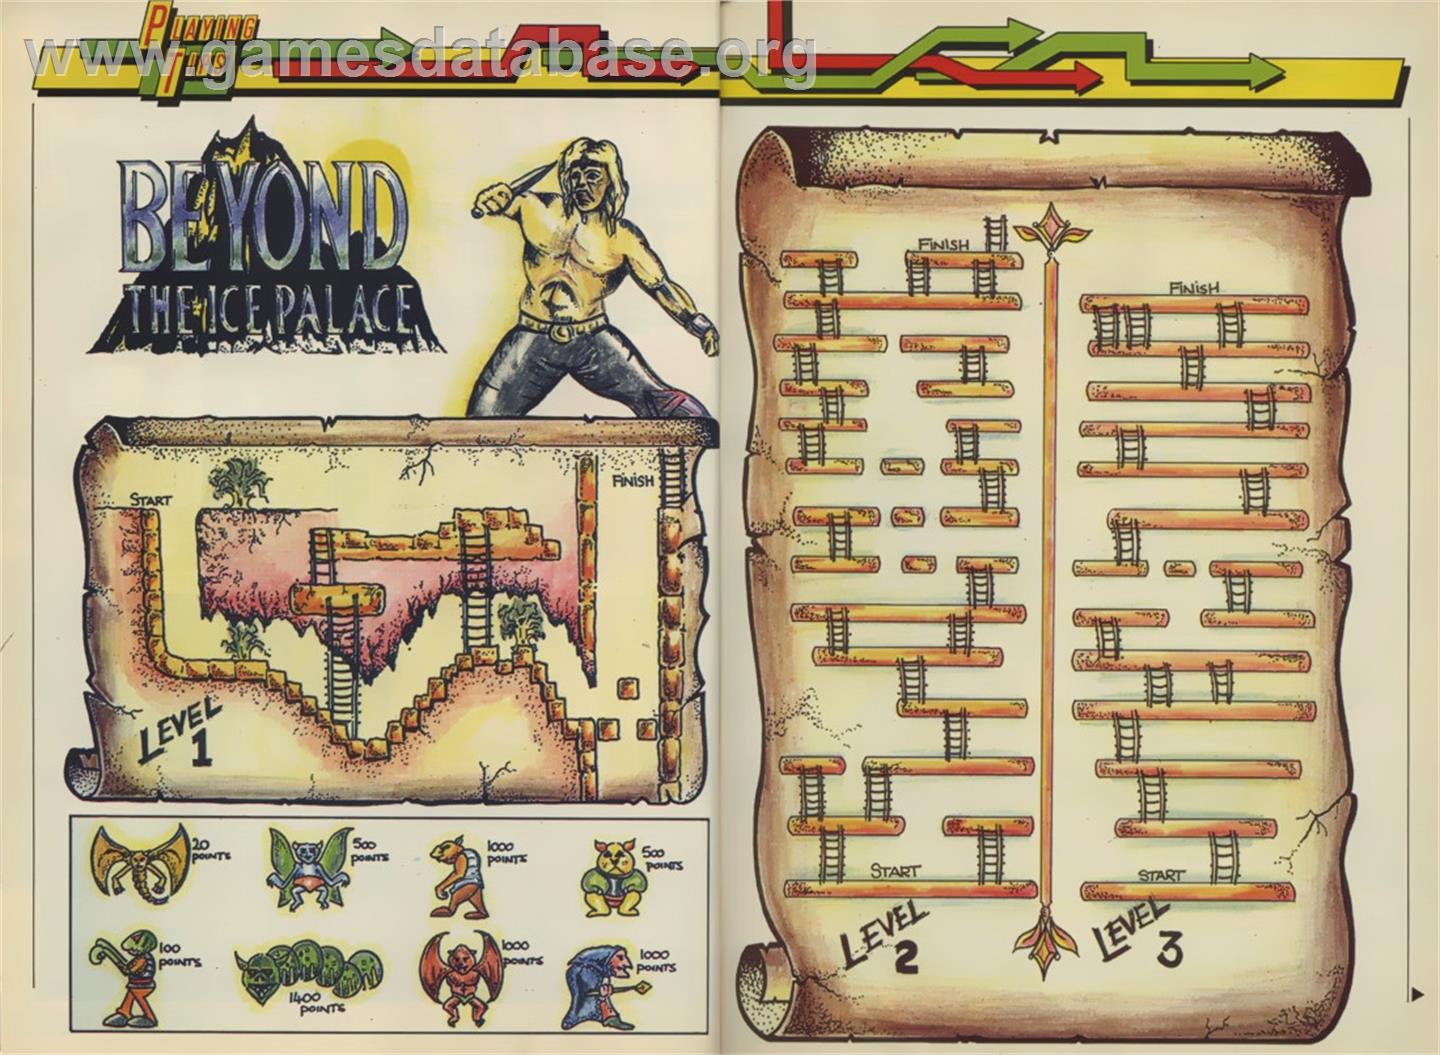 Beyond the Ice Palace - Atari ST - Artwork - Map